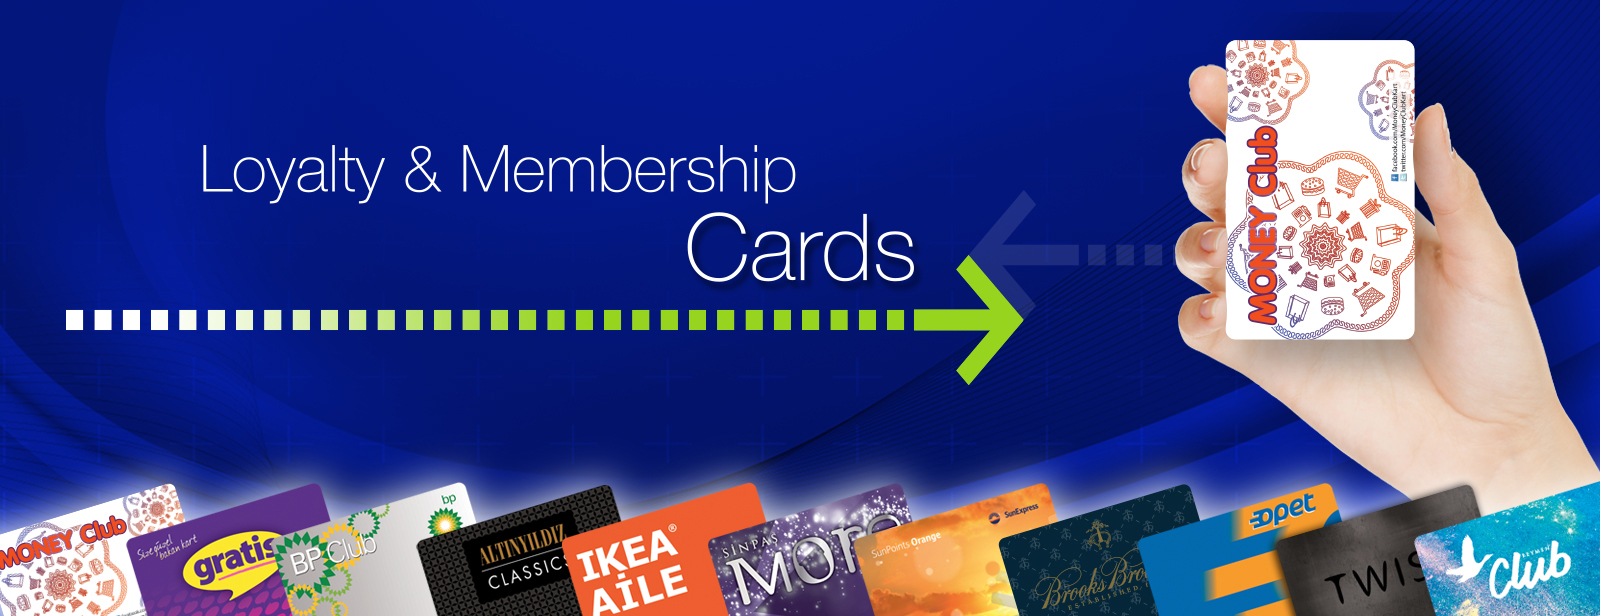 Loyalty & Membership Cards